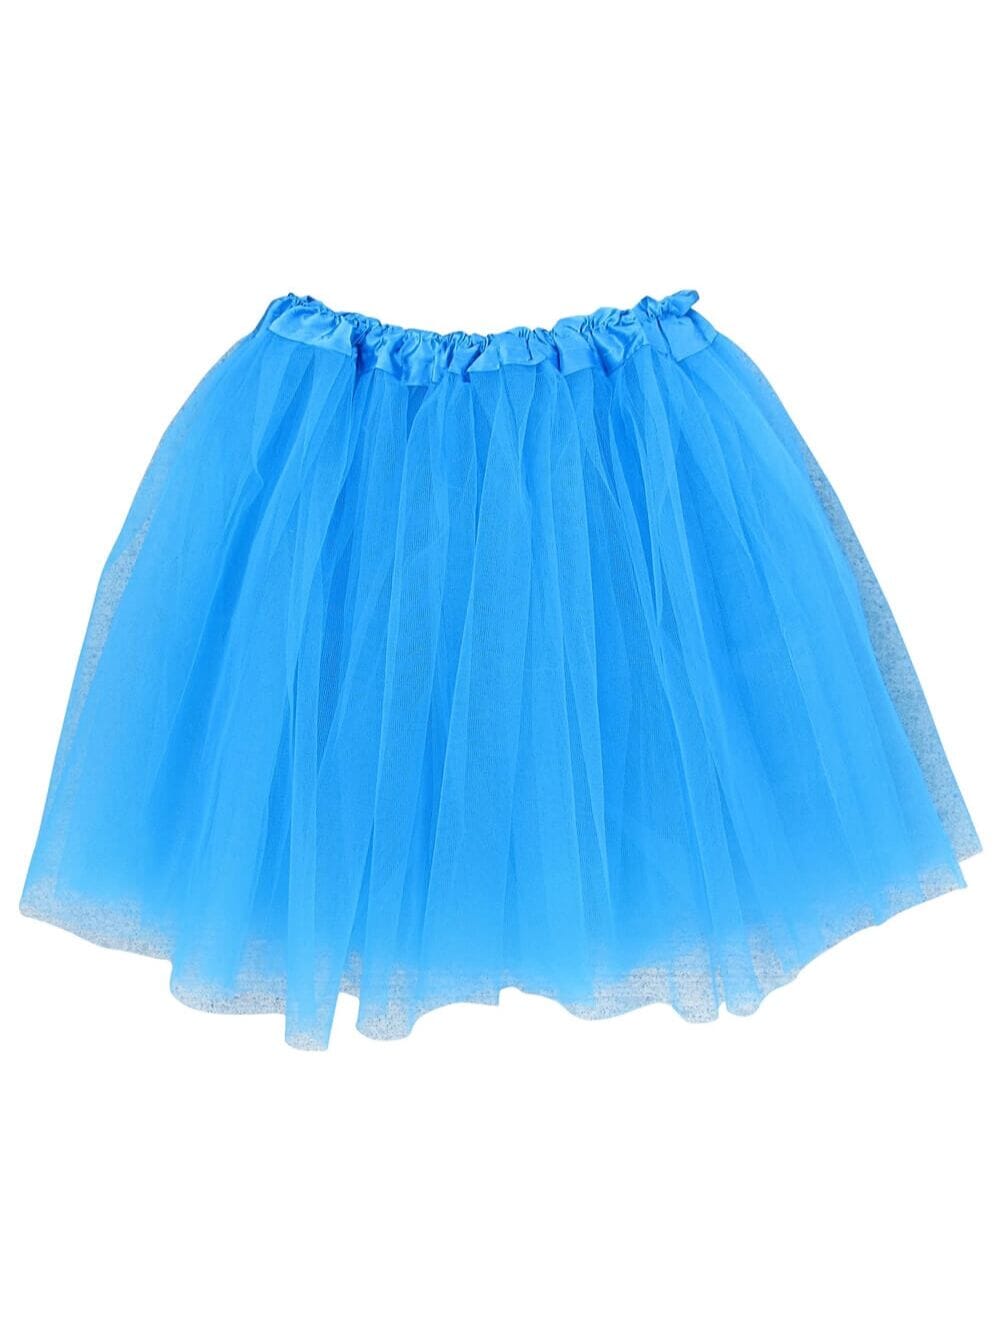 Neon Blue Plus Size Adult Tutu Skirt - Women's Plus Size 3- Layer Basic Ballet Costume Dance Tutus - Sydney So Sweet